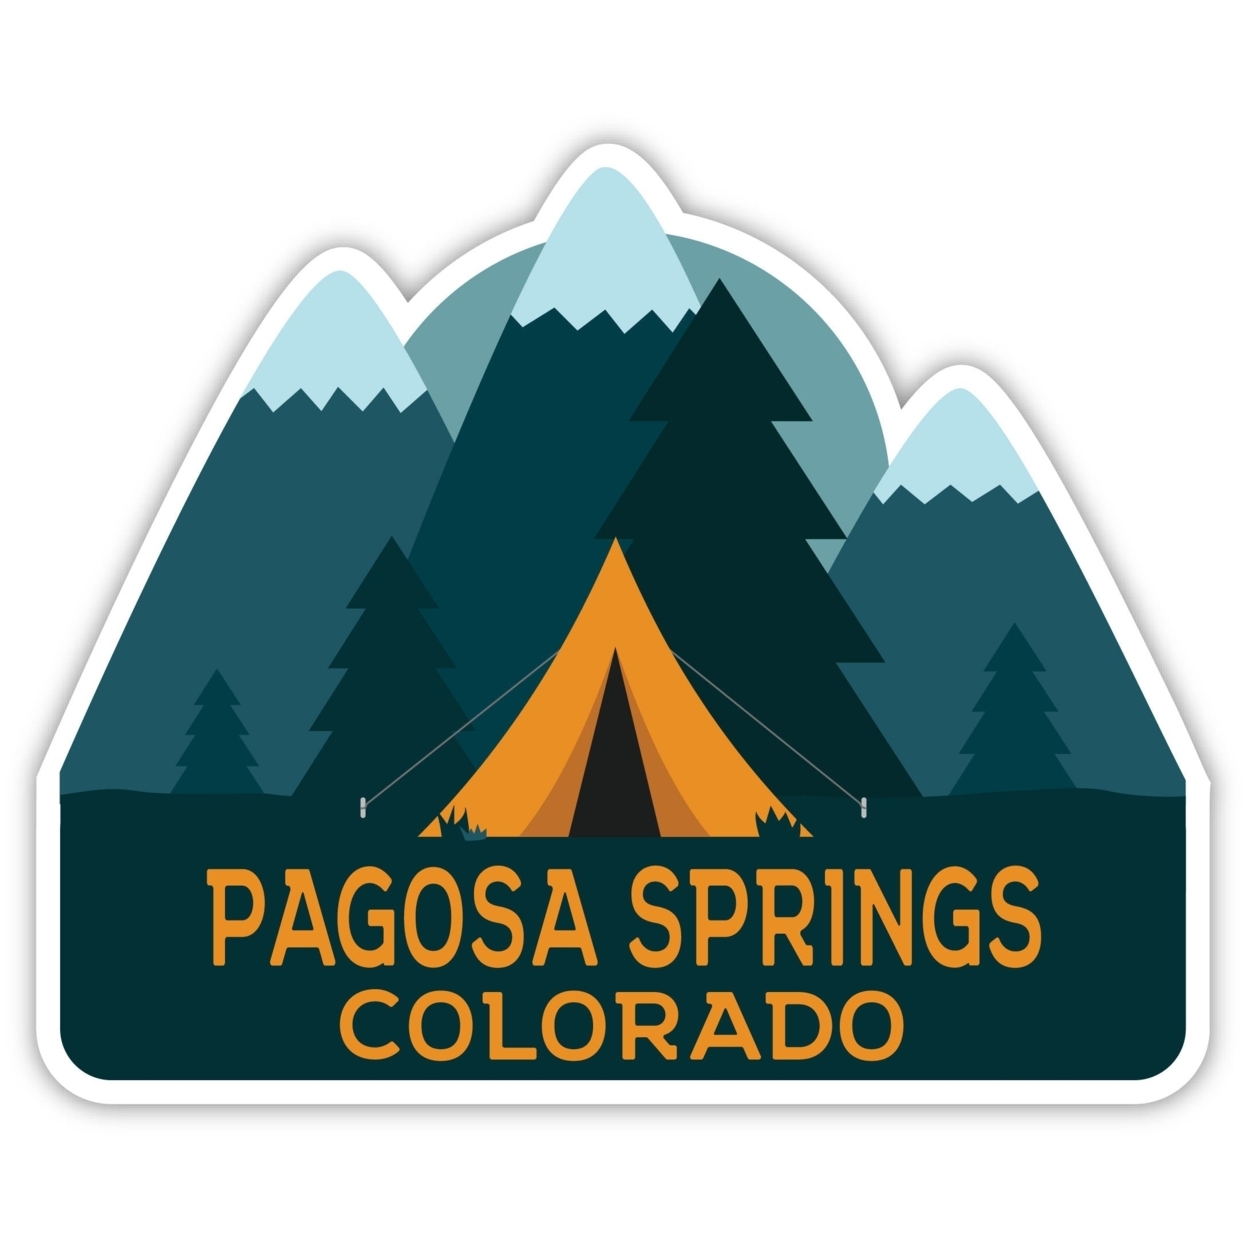 Pagosa Springs Colorado Souvenir Decorative Stickers (Choose Theme And Size) - Single Unit, 4-Inch, Camp Life